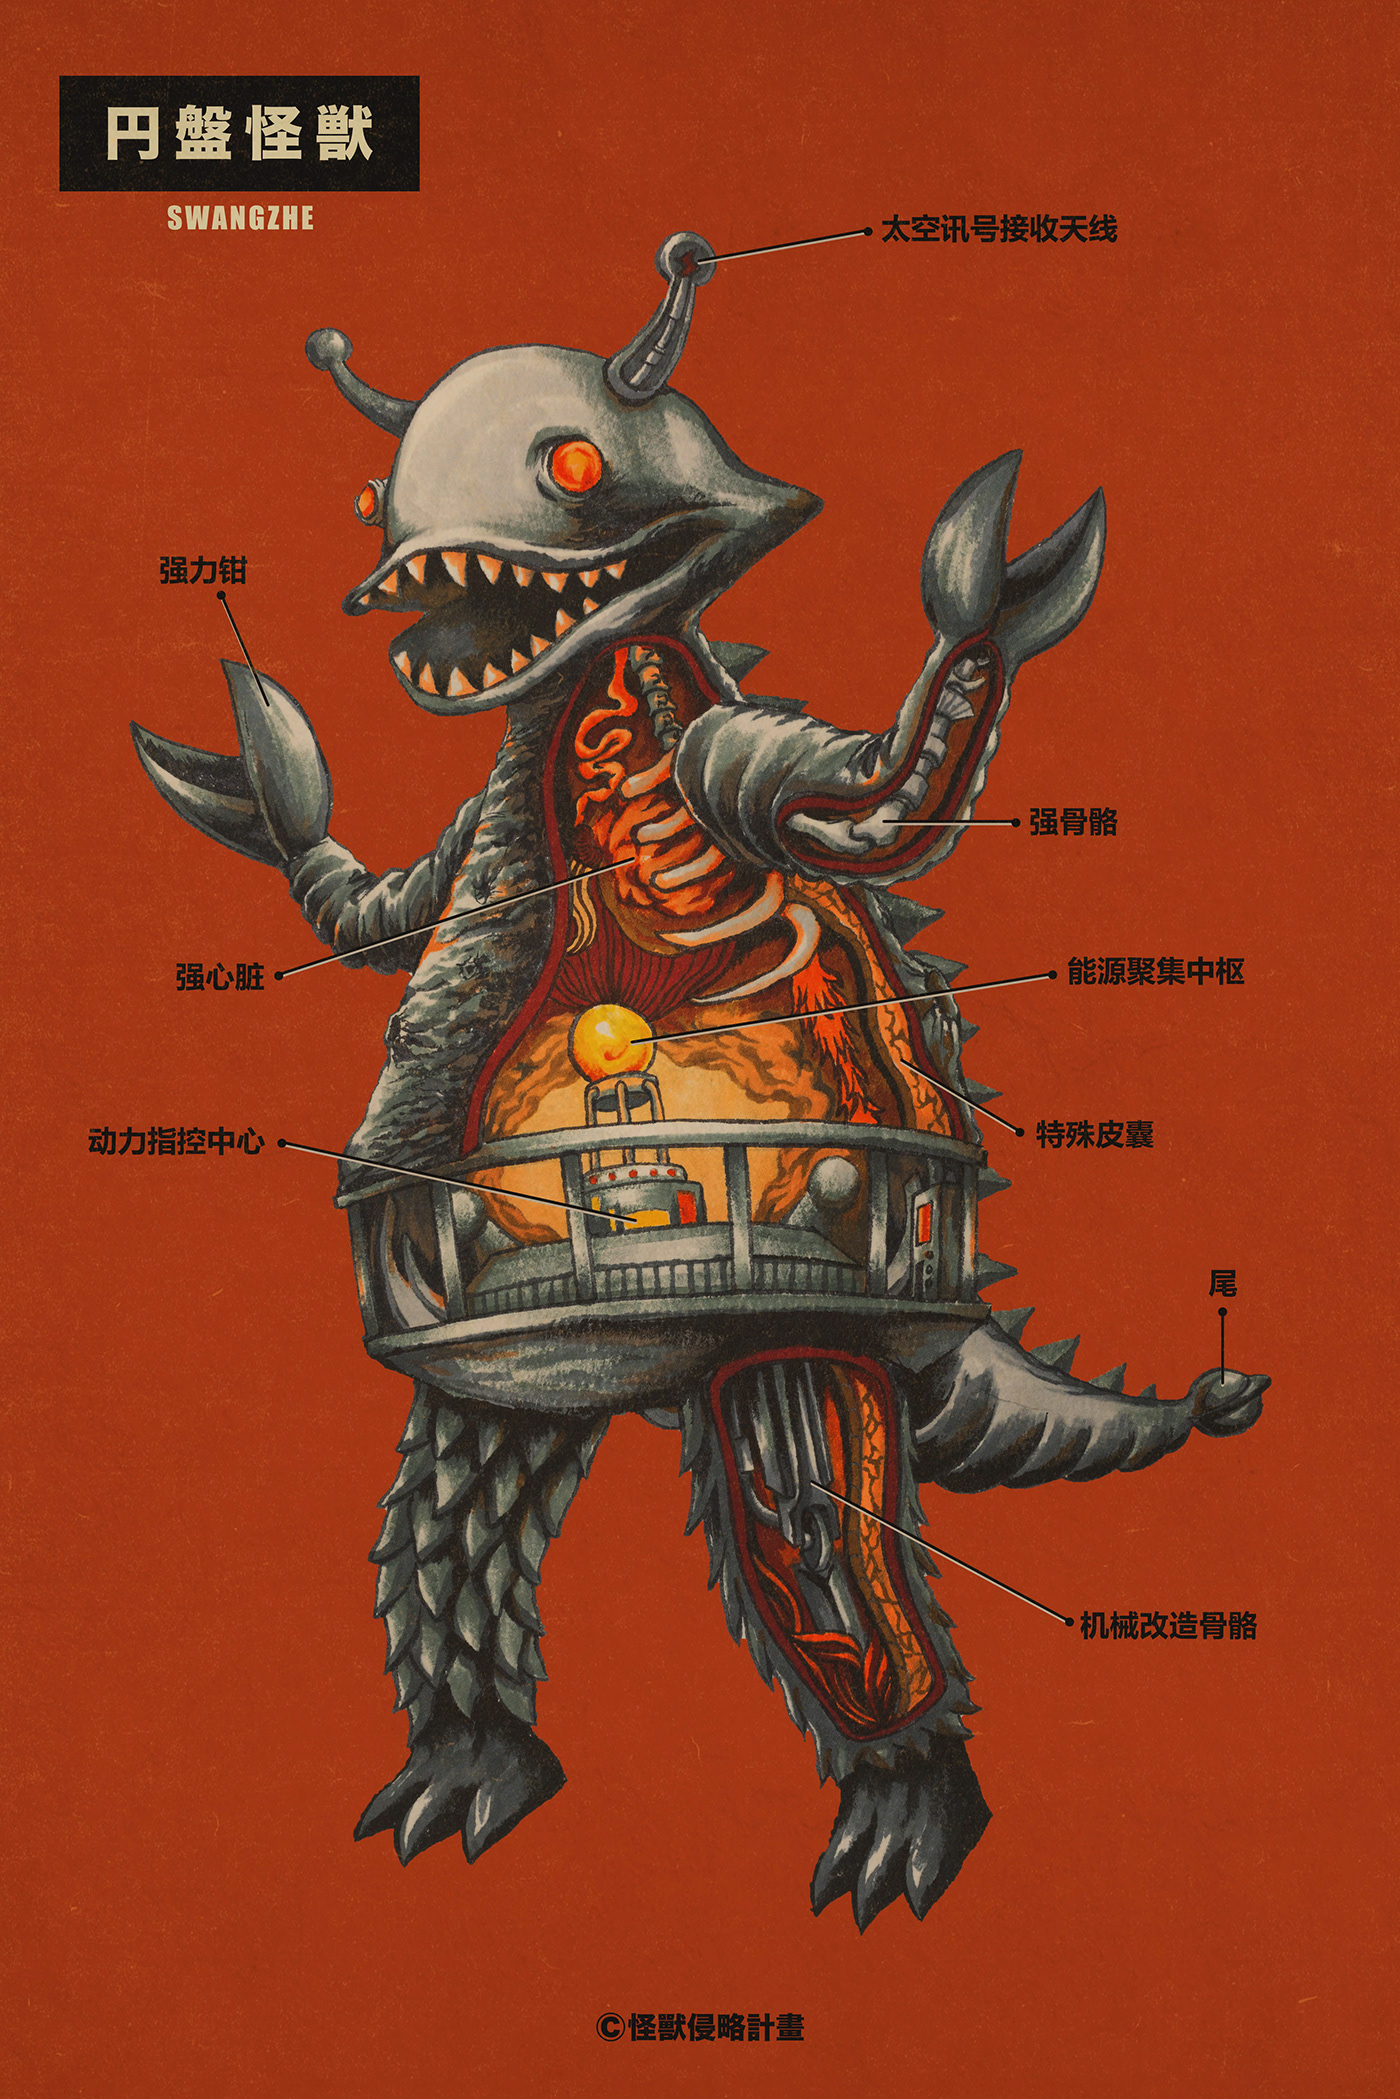 ILLUSTRATION  Drawing  artwork artist painting   Character design  kaiju monster book design vintage